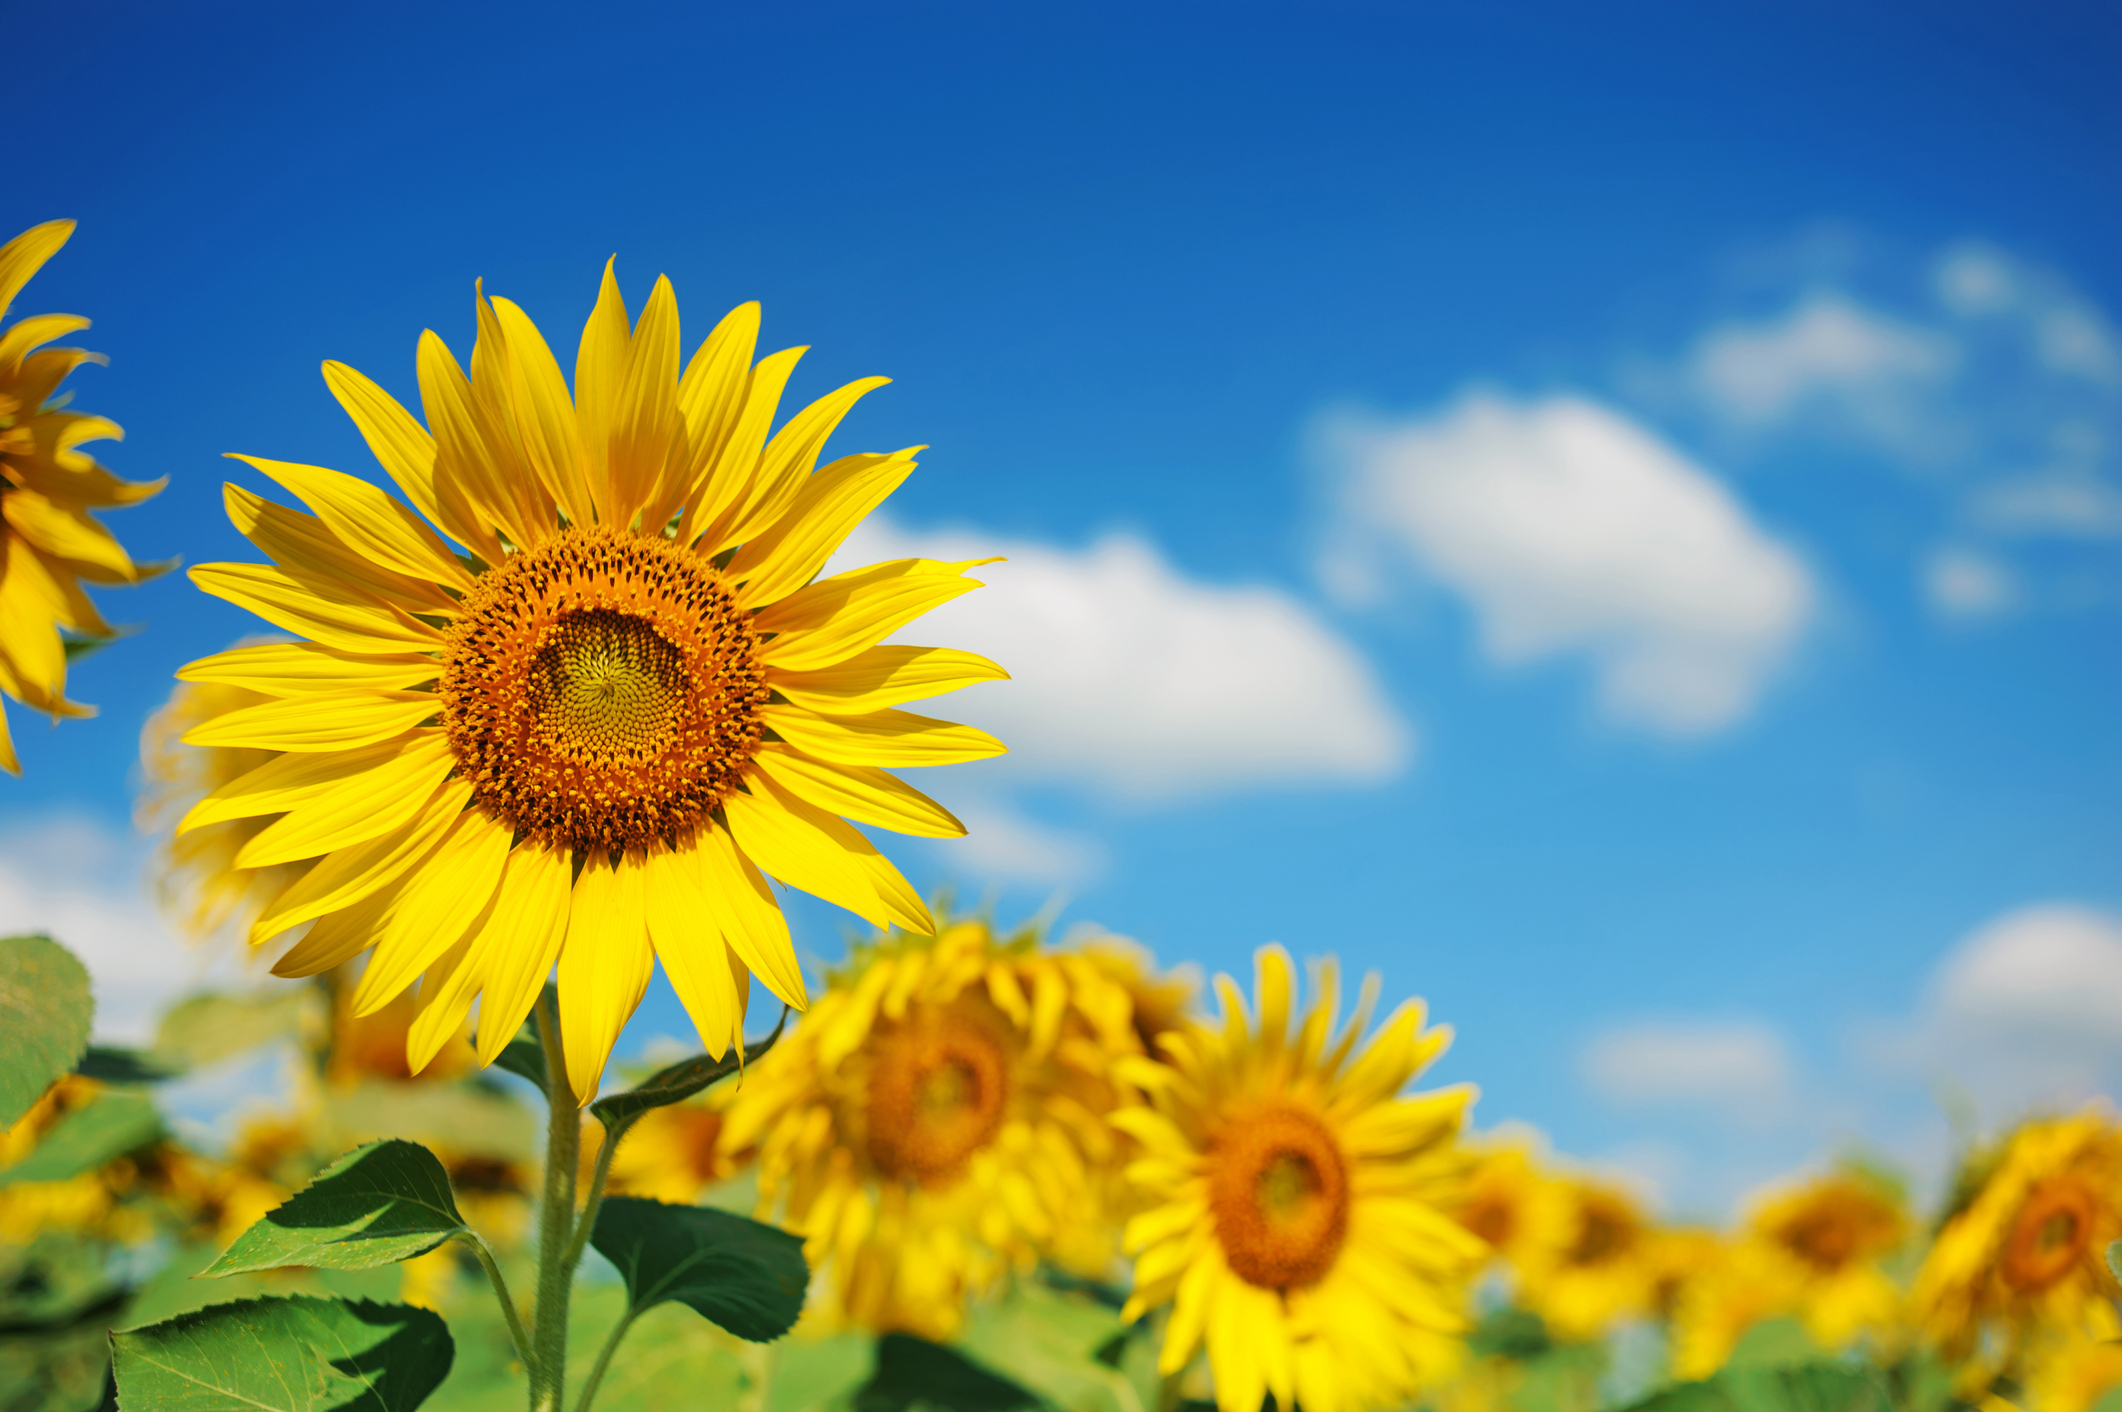 A sunflower with a blue sky.